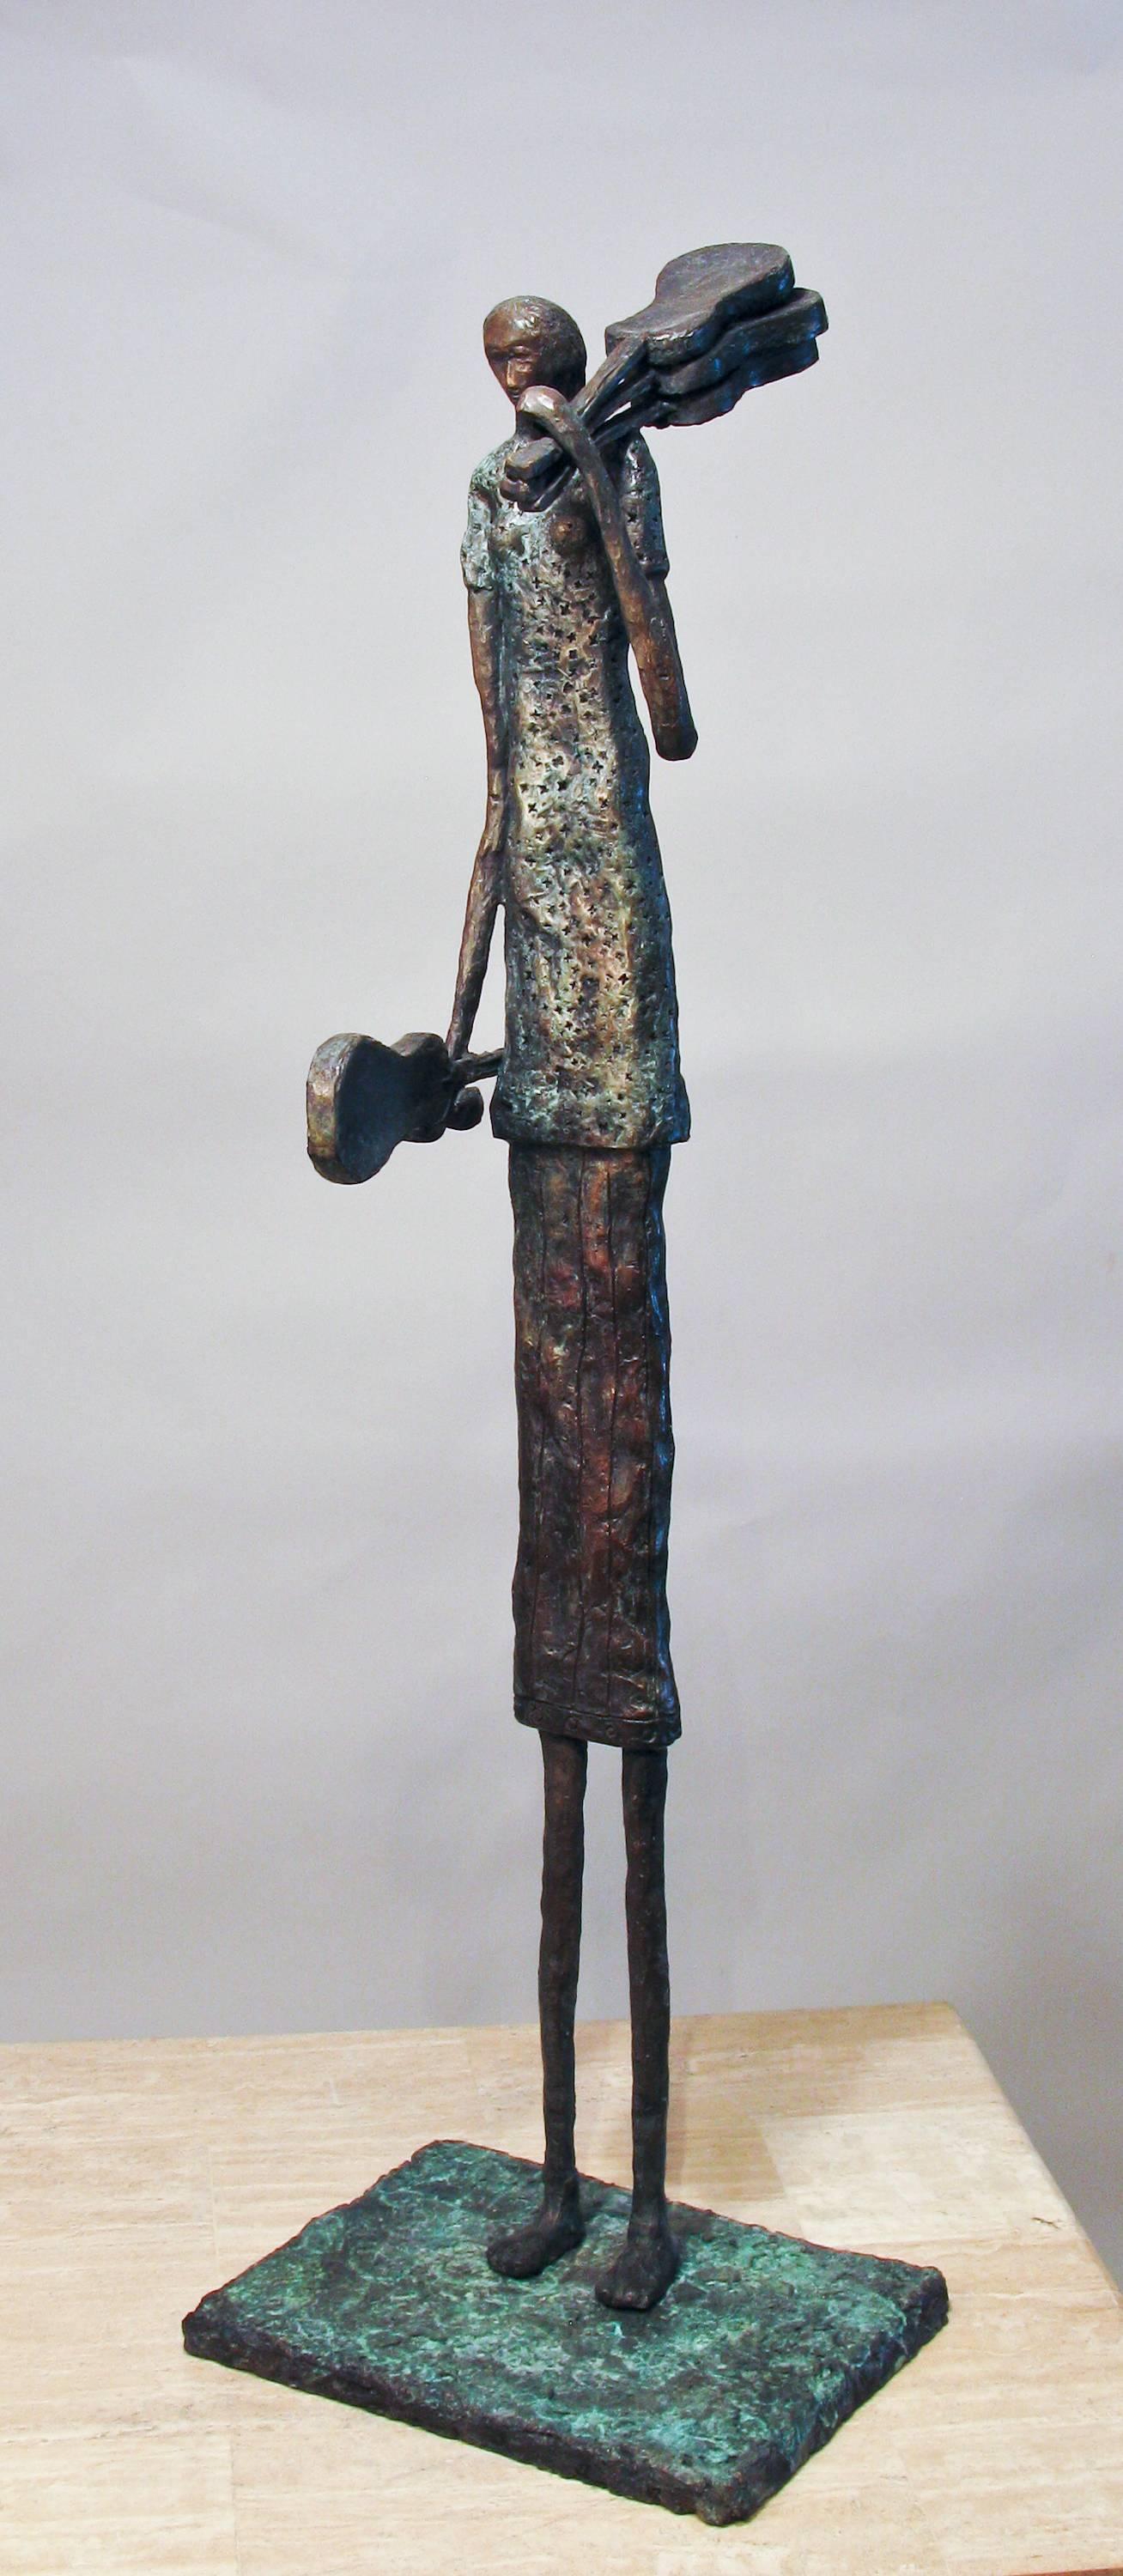 Eduardo Oropeza Figurative Sculpture - Guitarras, bronze sculpture, vertical, guitar seller, rustic, textured bronze